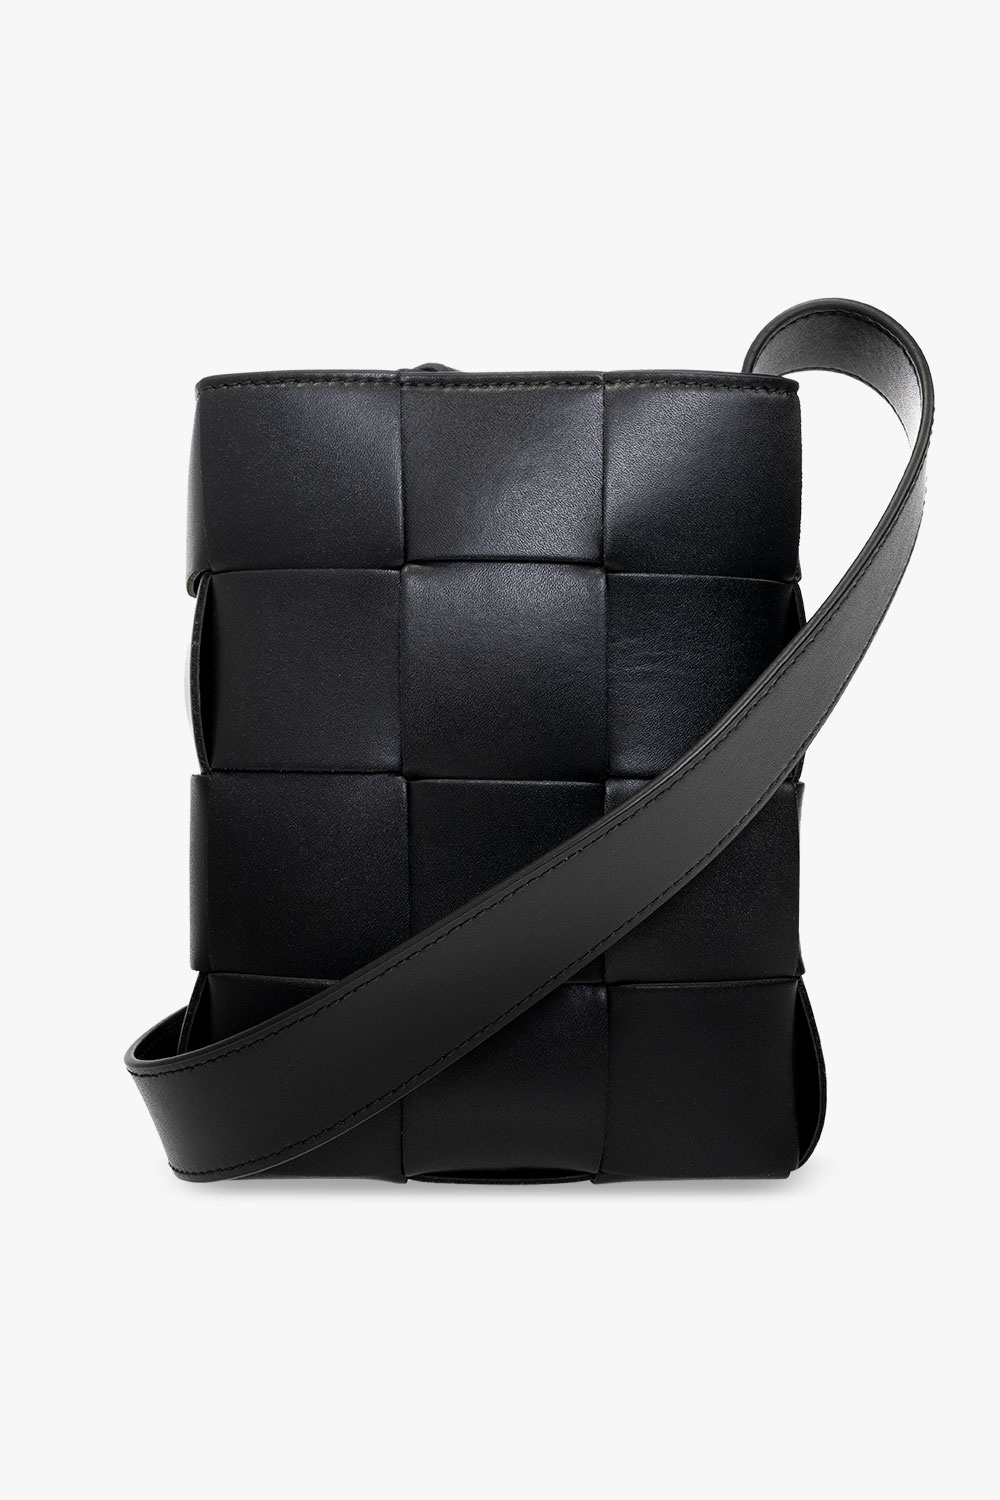 Bottega Veneta Strapped leather phone holder